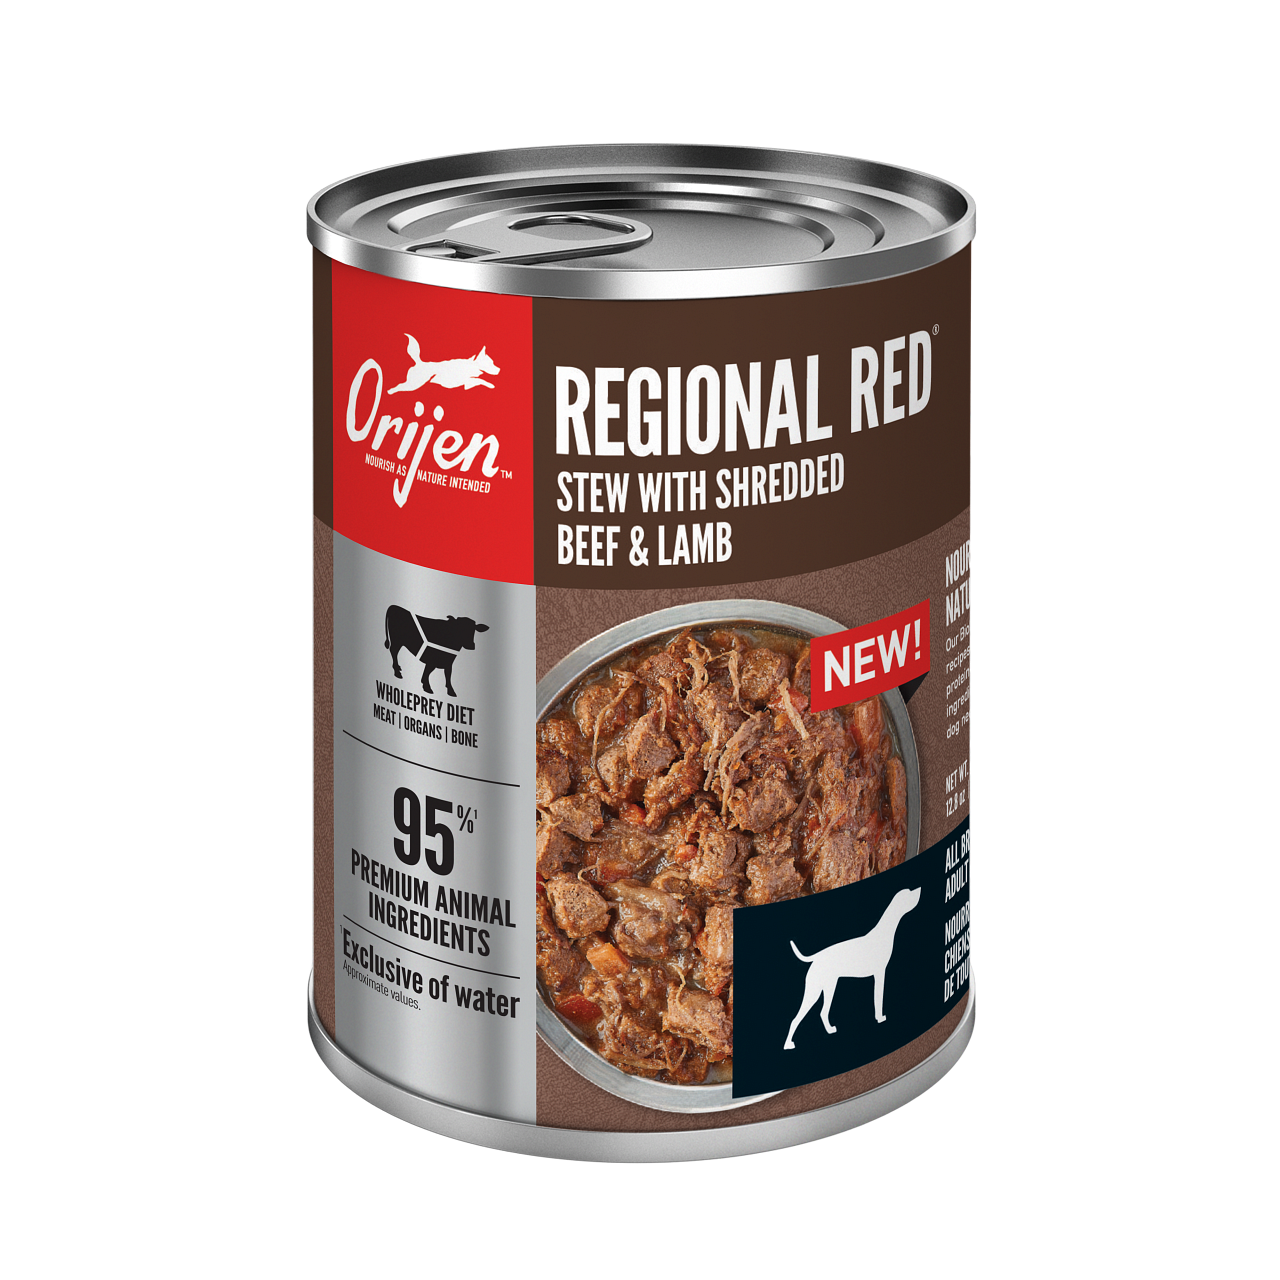 Orijen Premium Regional Red with Shredded Beef & Lamb Stew Recipe Canned Dog Food